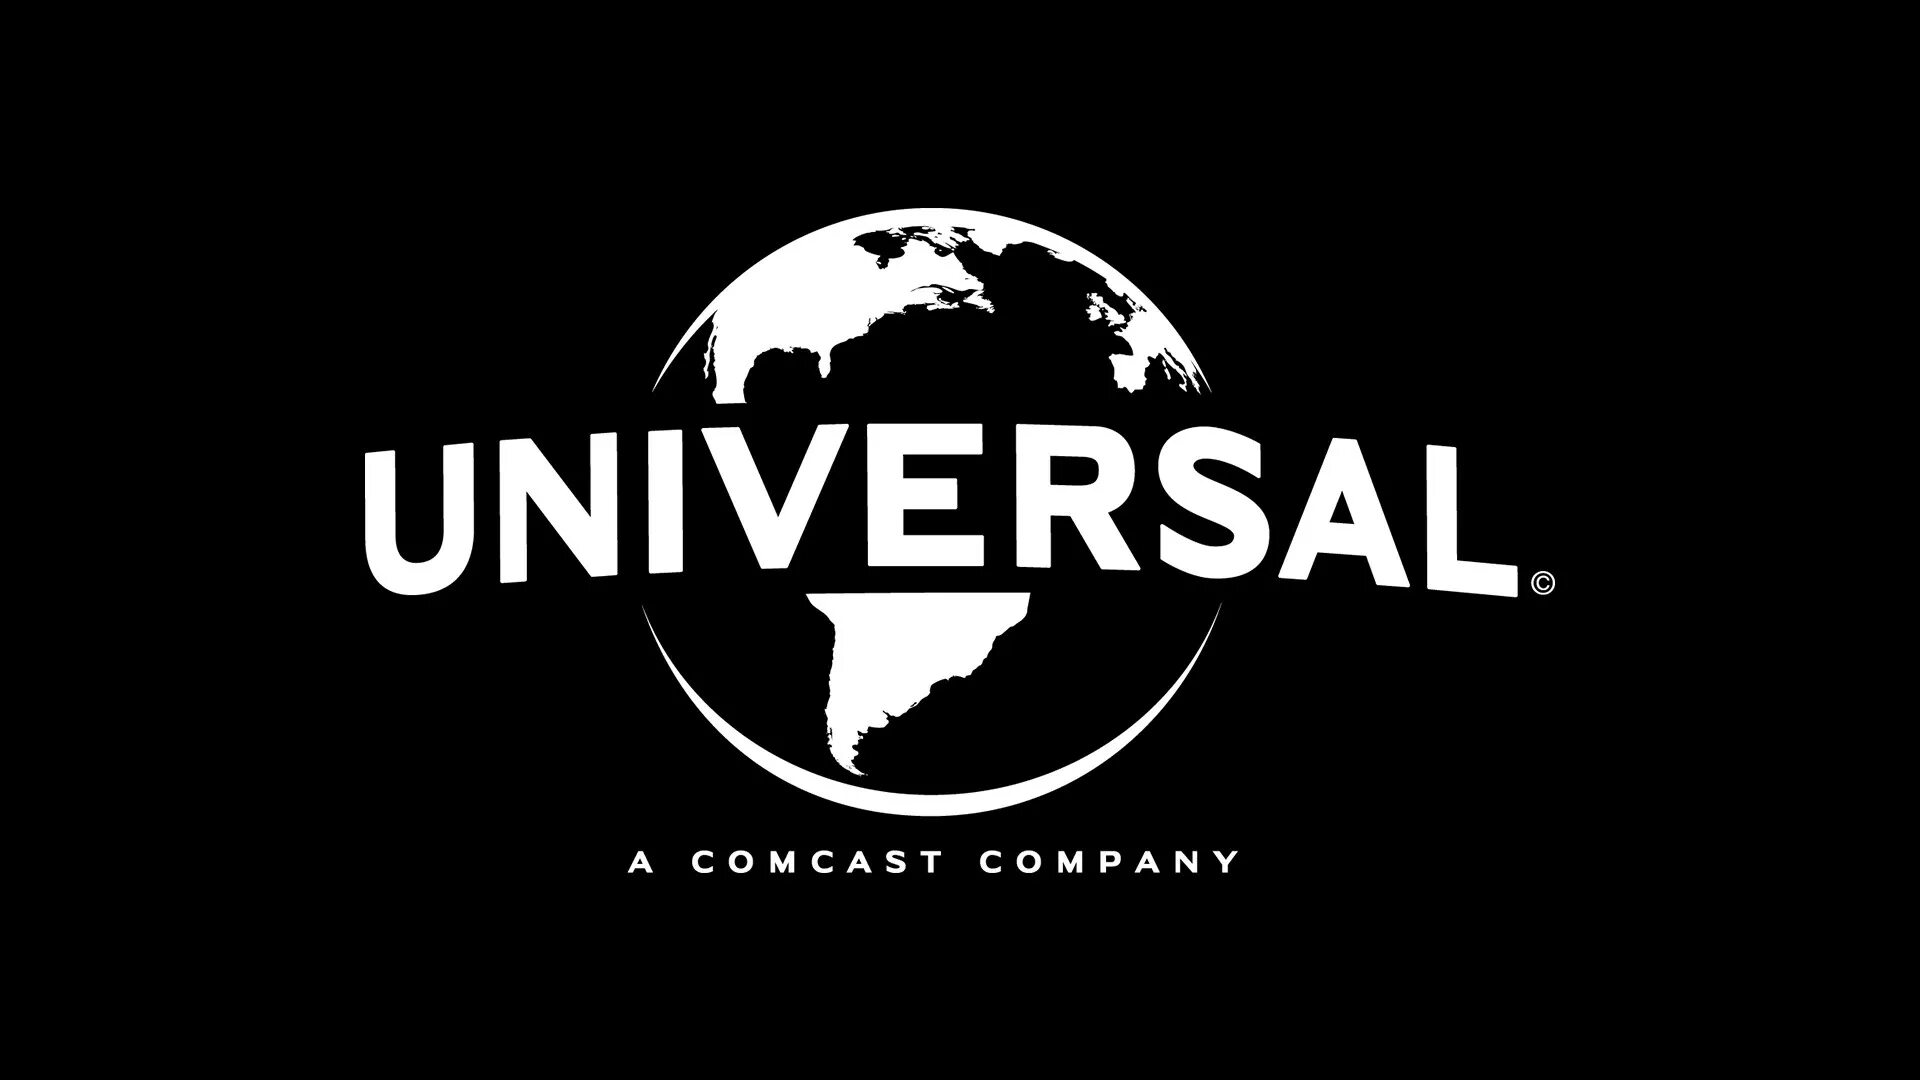 Компания пикчерз. Юниверсал киностудия логотип. Кинокомпания Universal pictures. Логотип компании Юниверсал пикчерс. Юнивёрсал пикчерс логотип 1912.